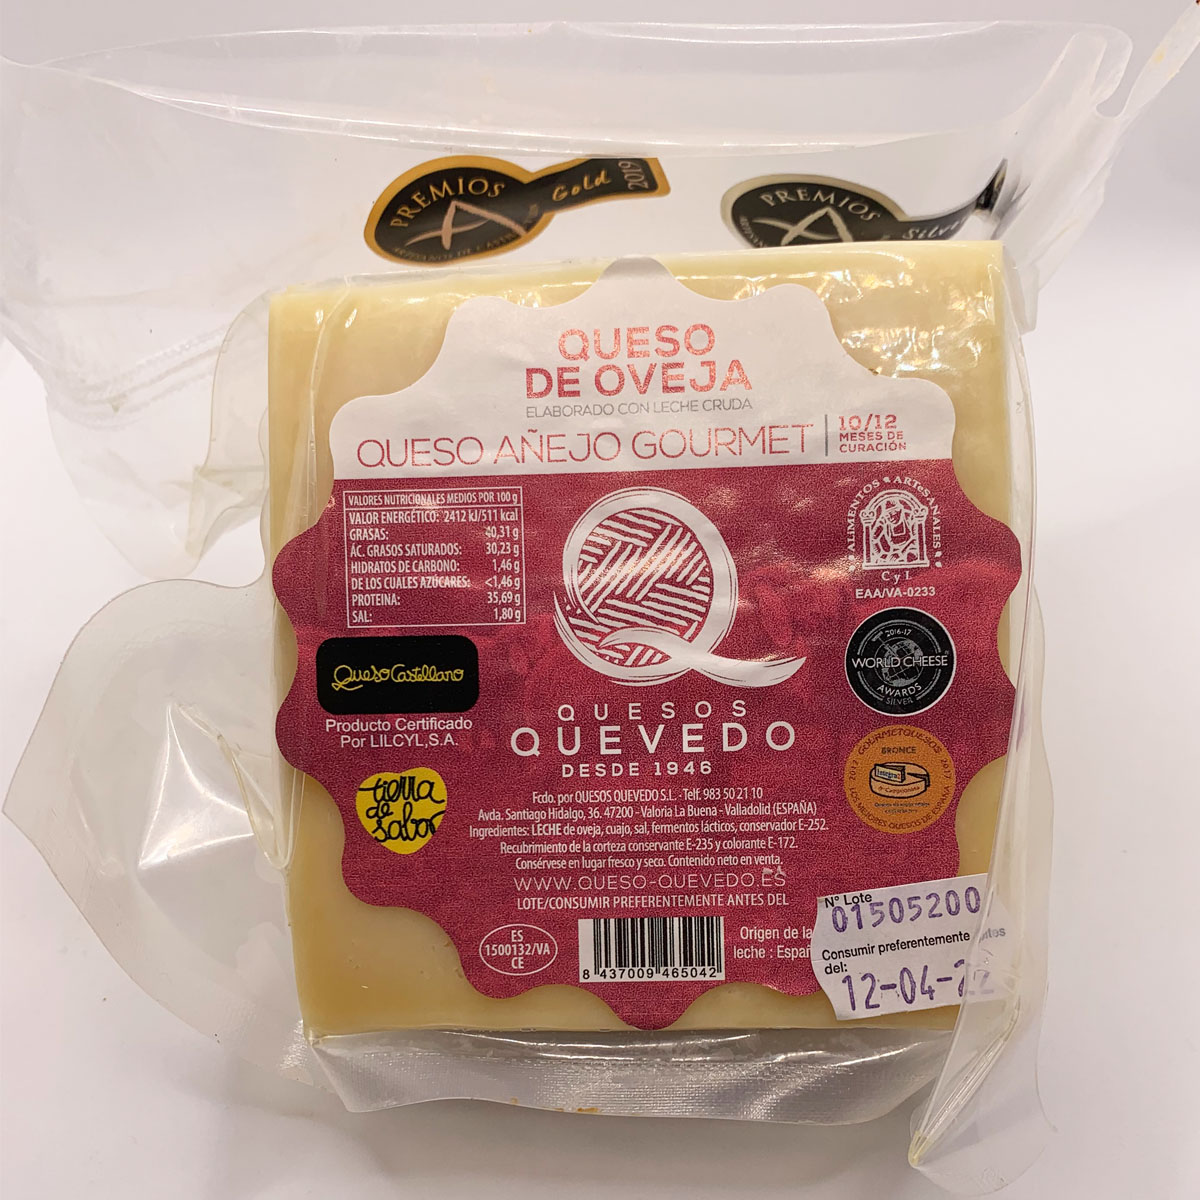 Gourmet Quevedo cheese wedge